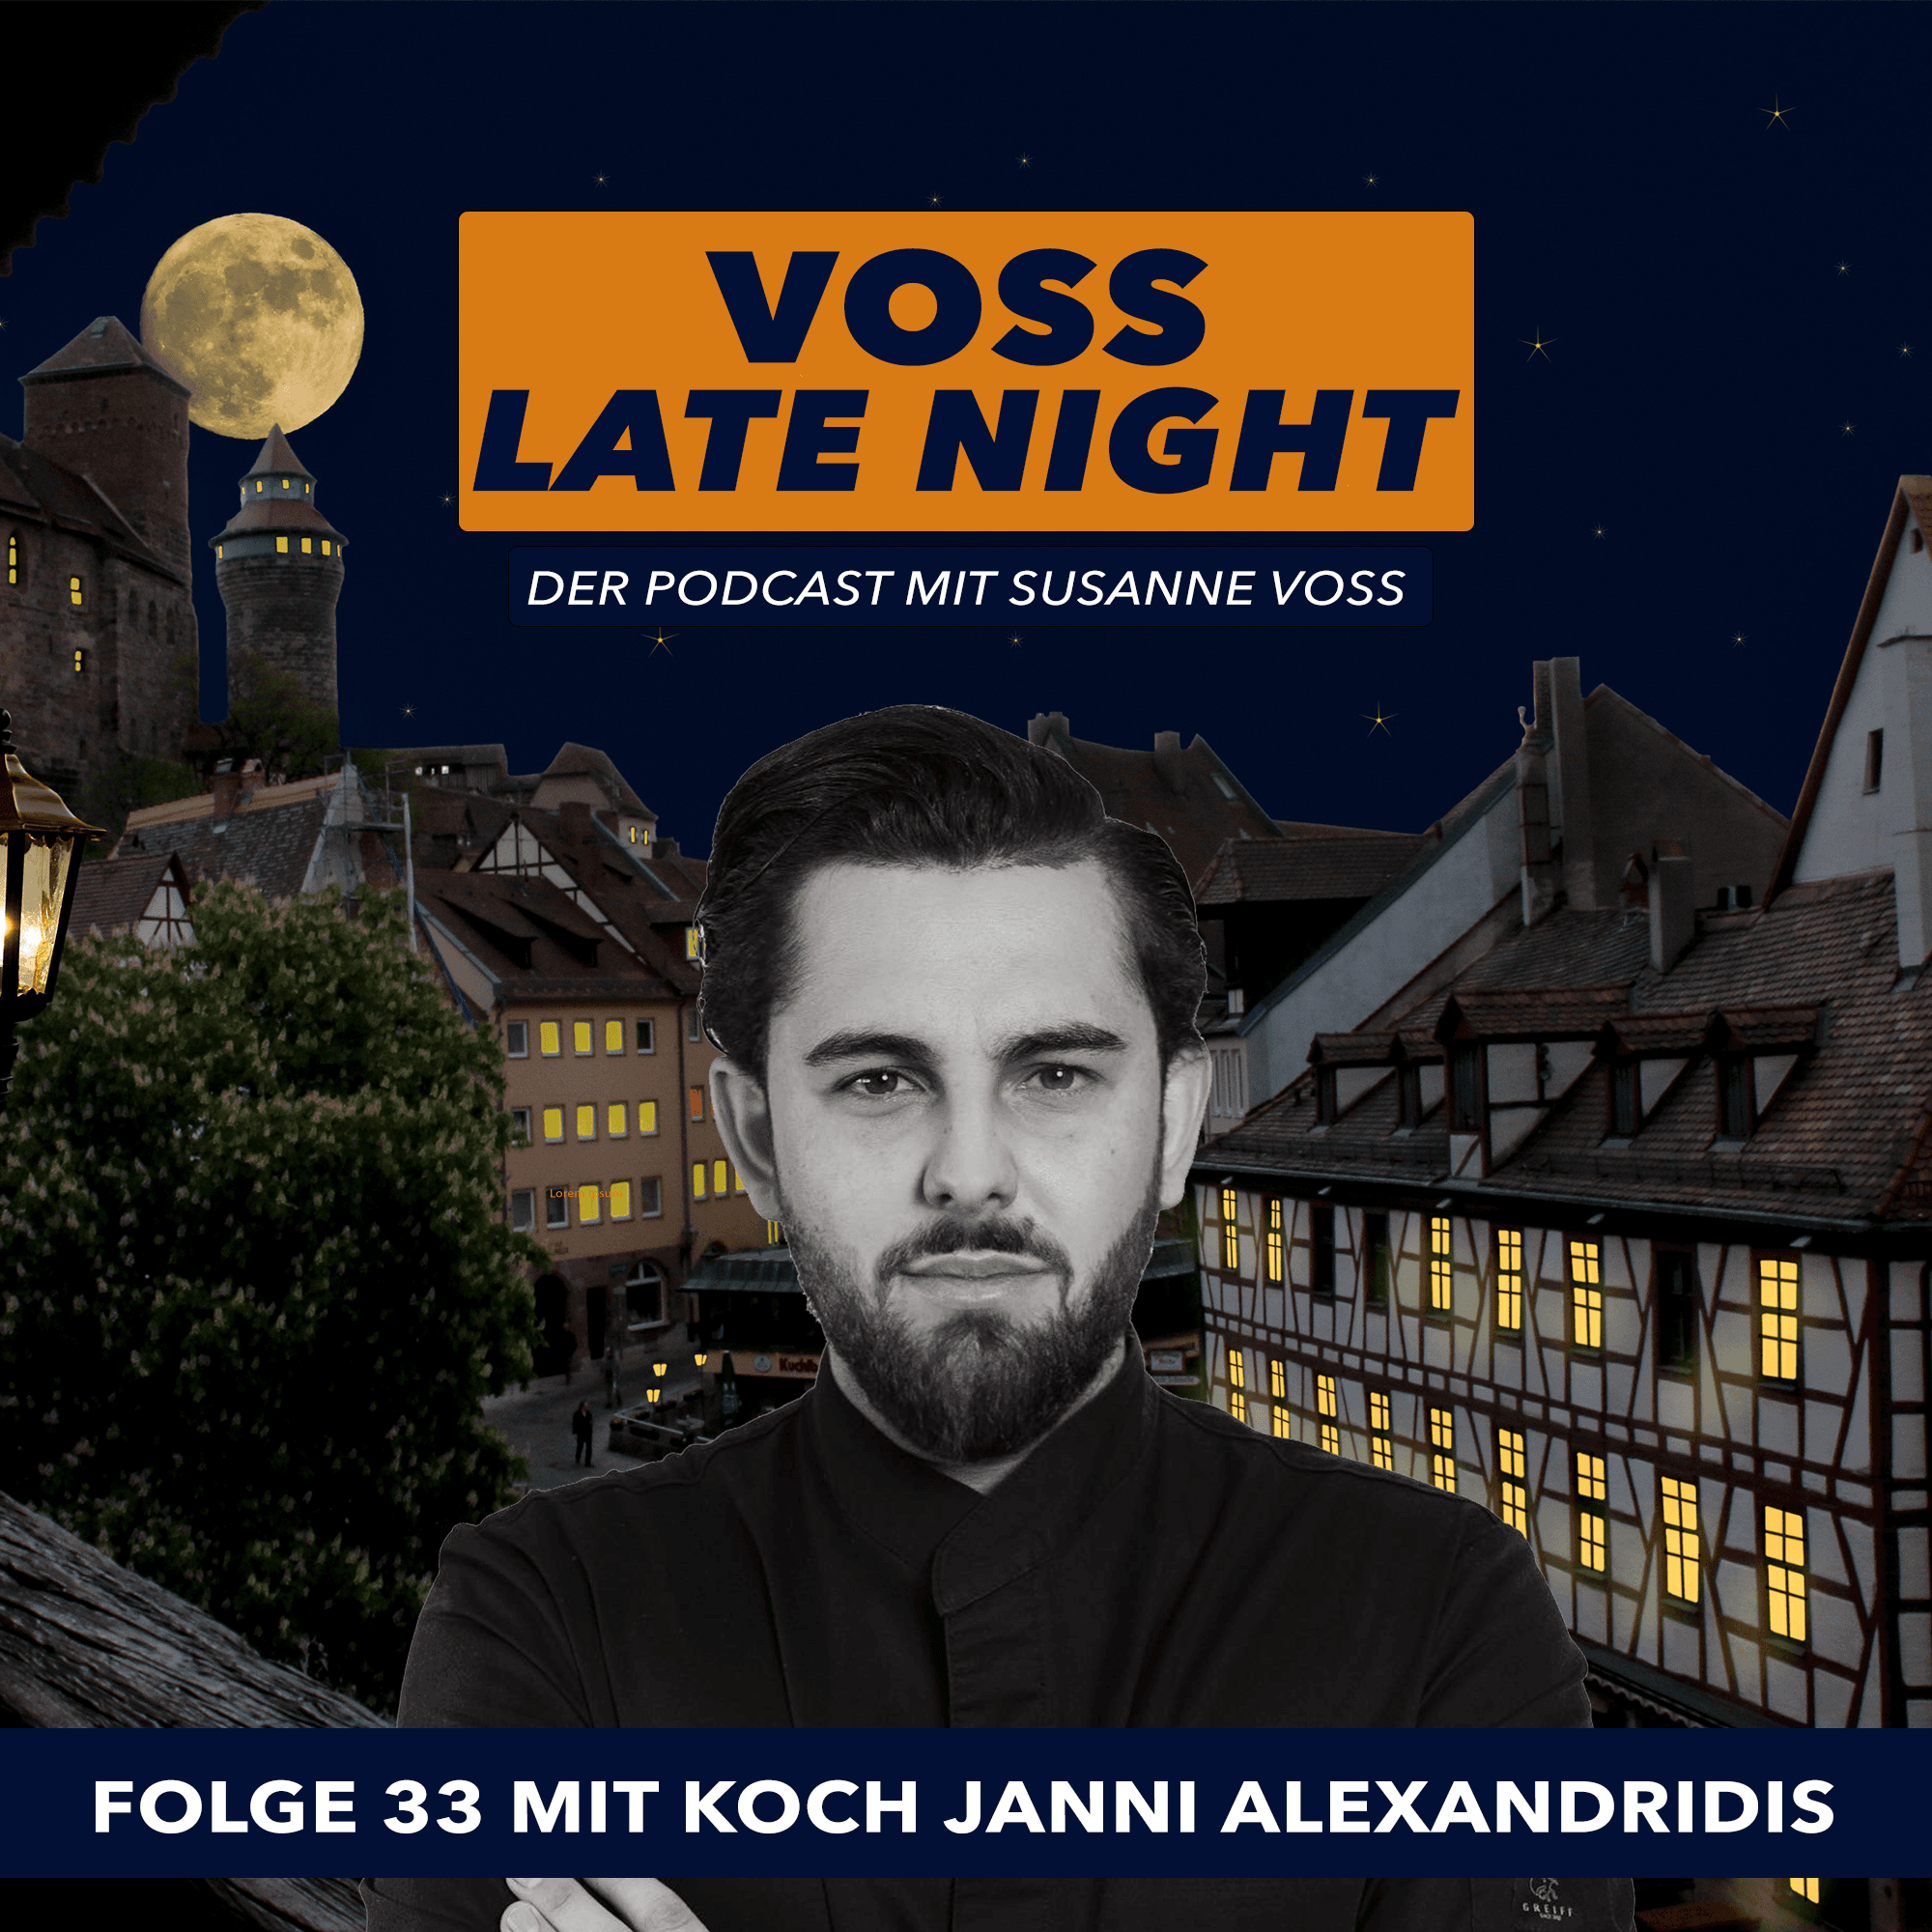 VOSS LATE NIGHT – Folge 33 mit Koch Janni Alexandridis